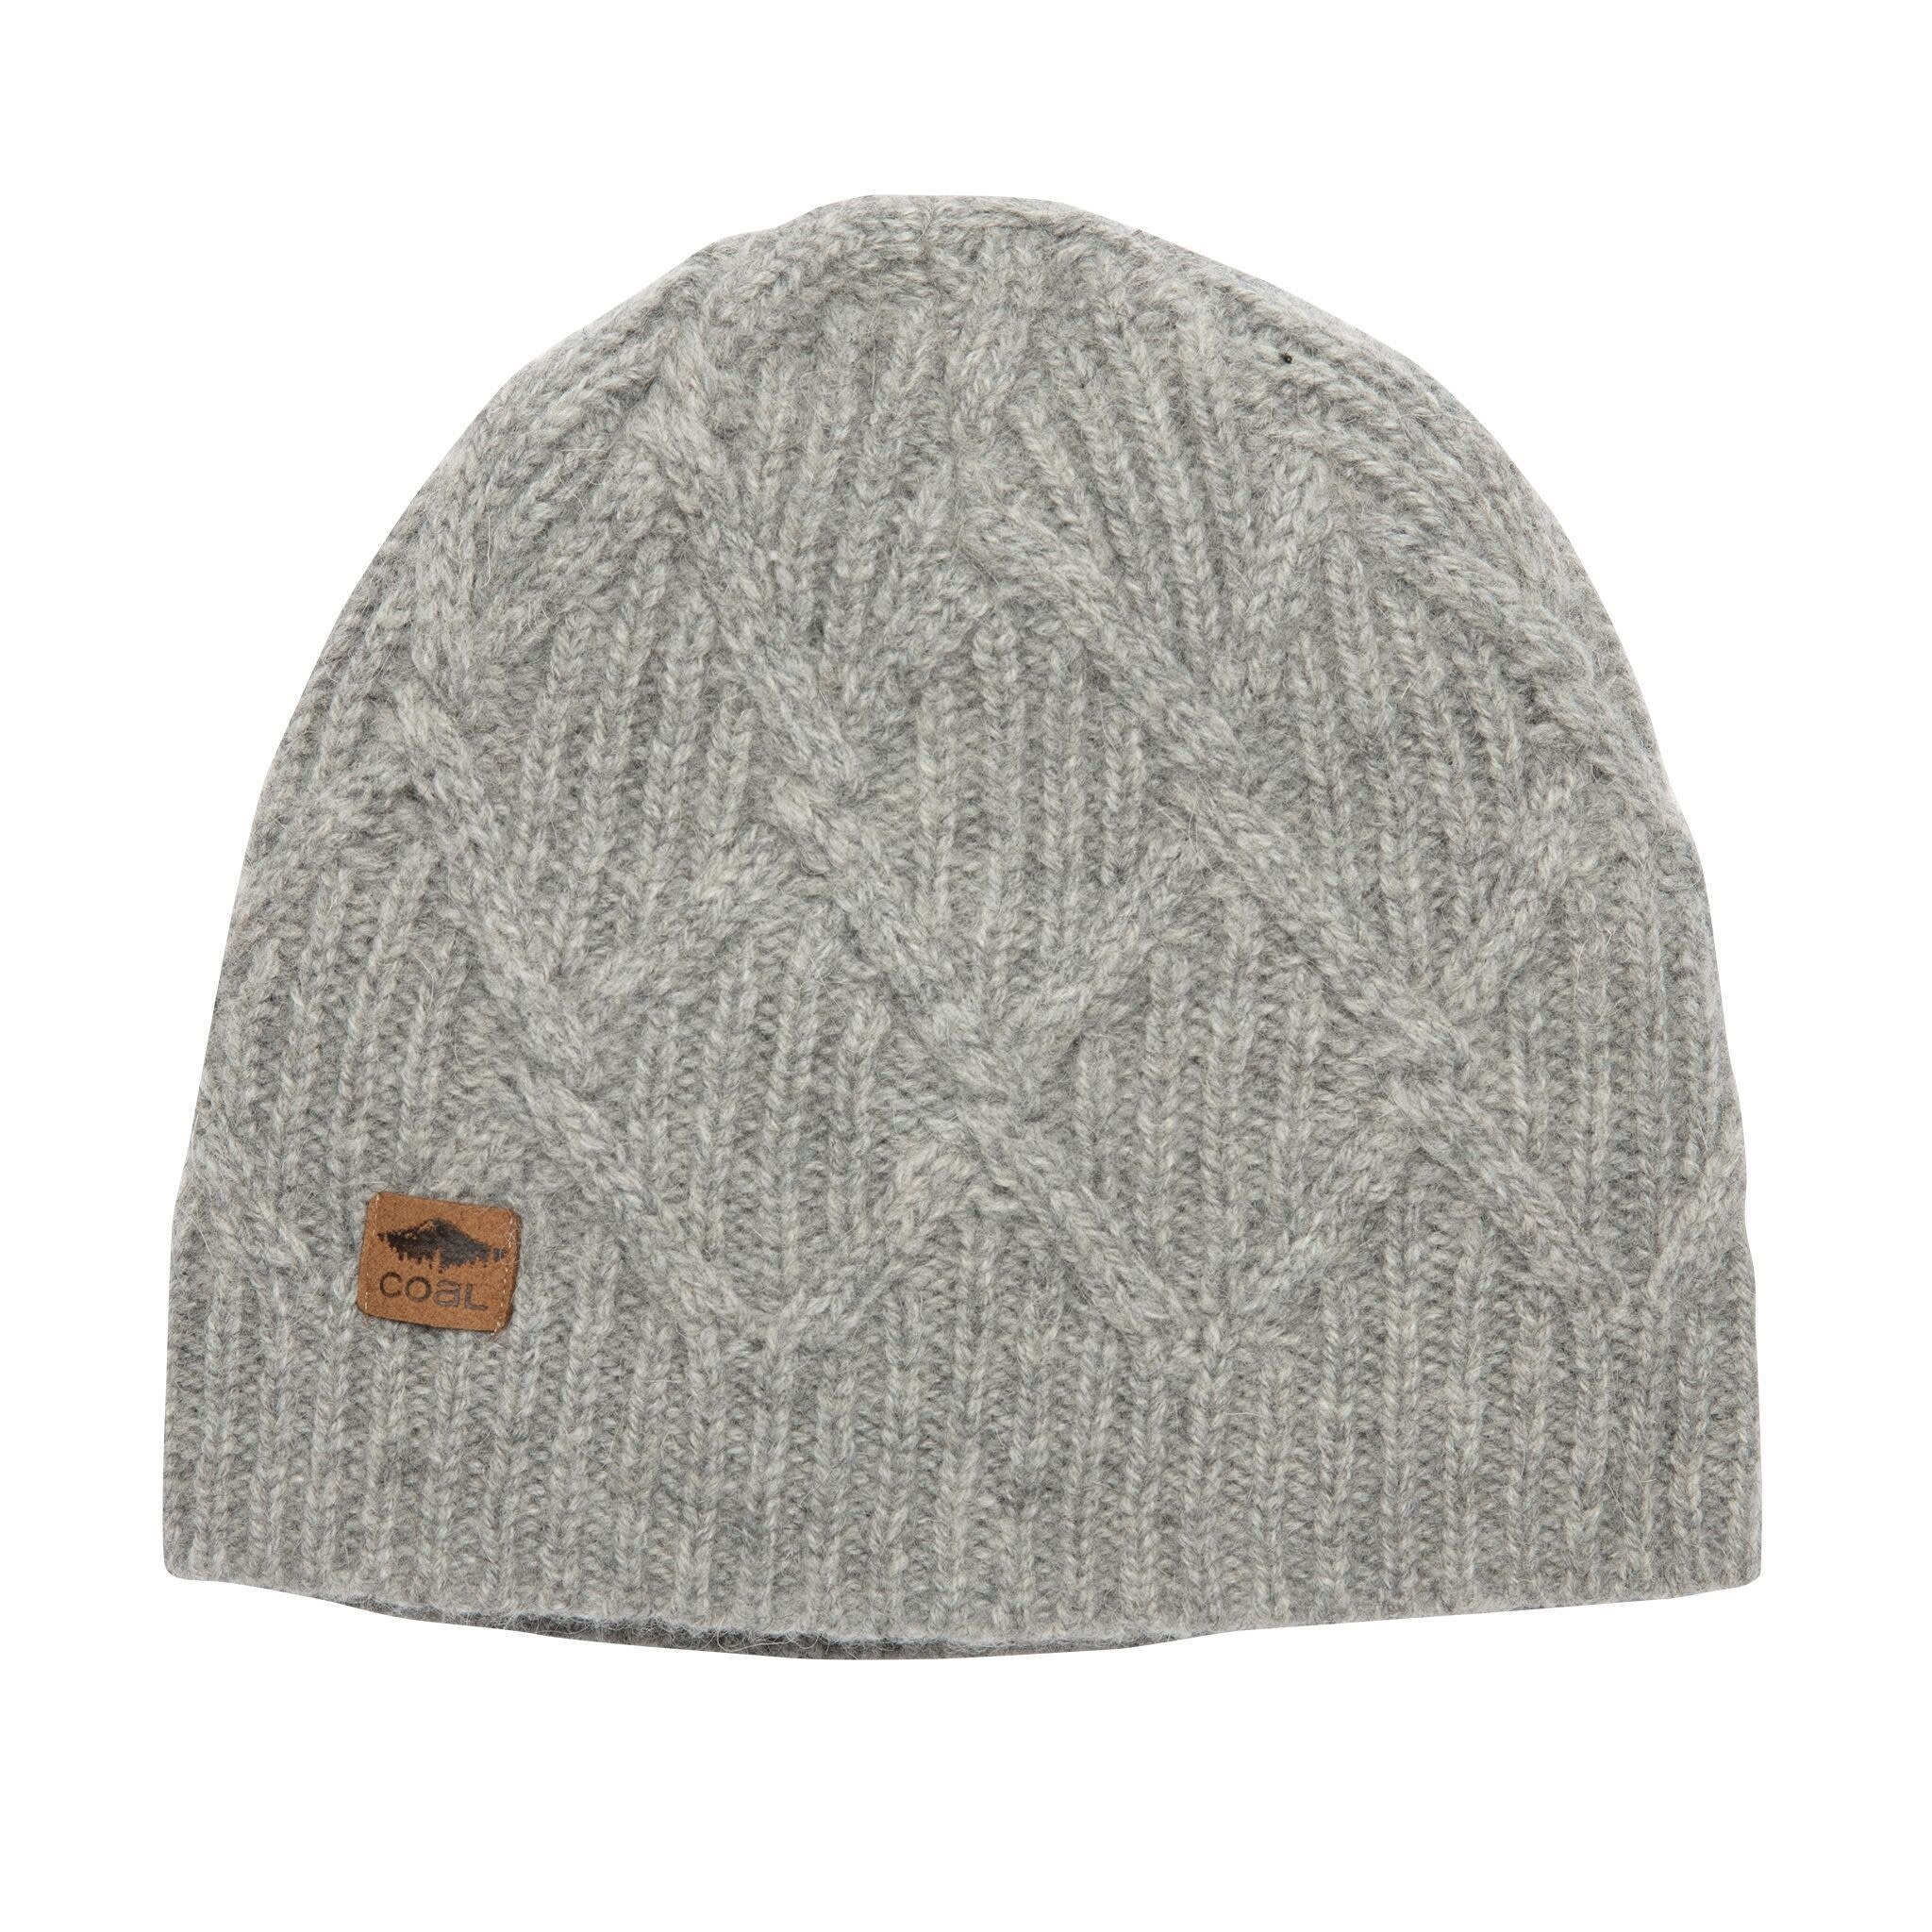 Coal Yukon Cable Knit Wool Beanie Winter Hat